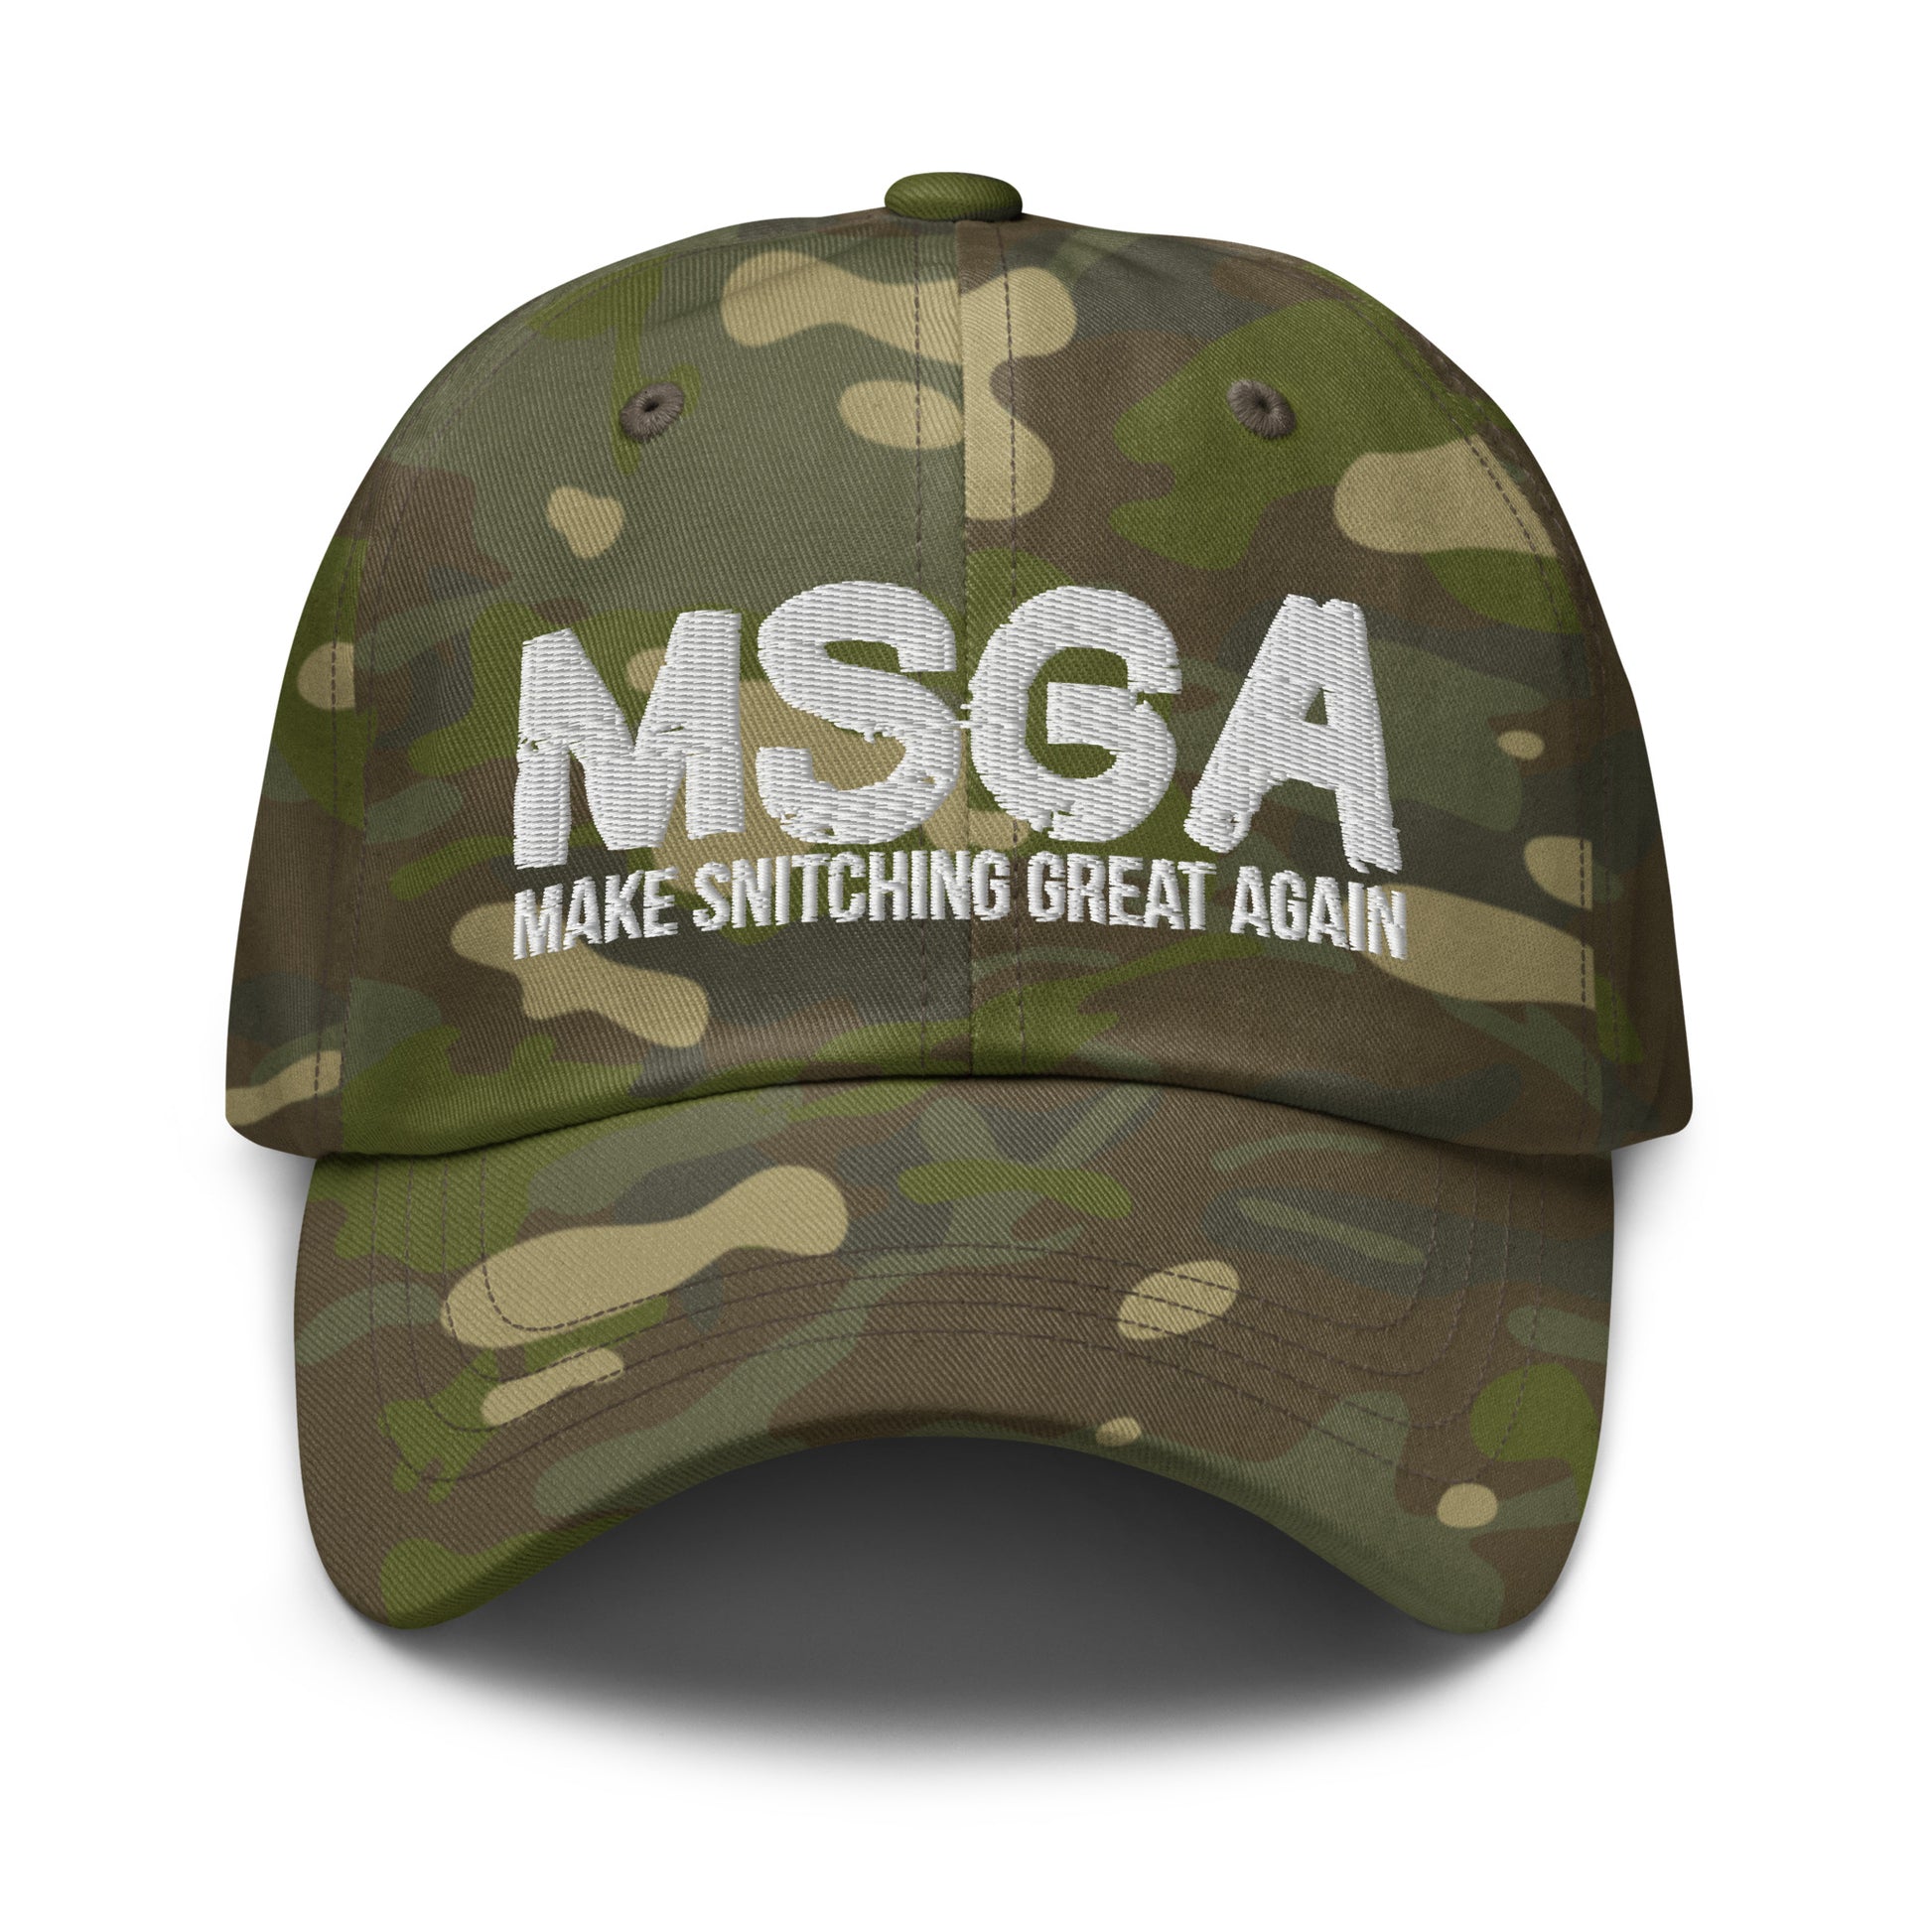 MSGA War Hat - Make Snitching Great Again